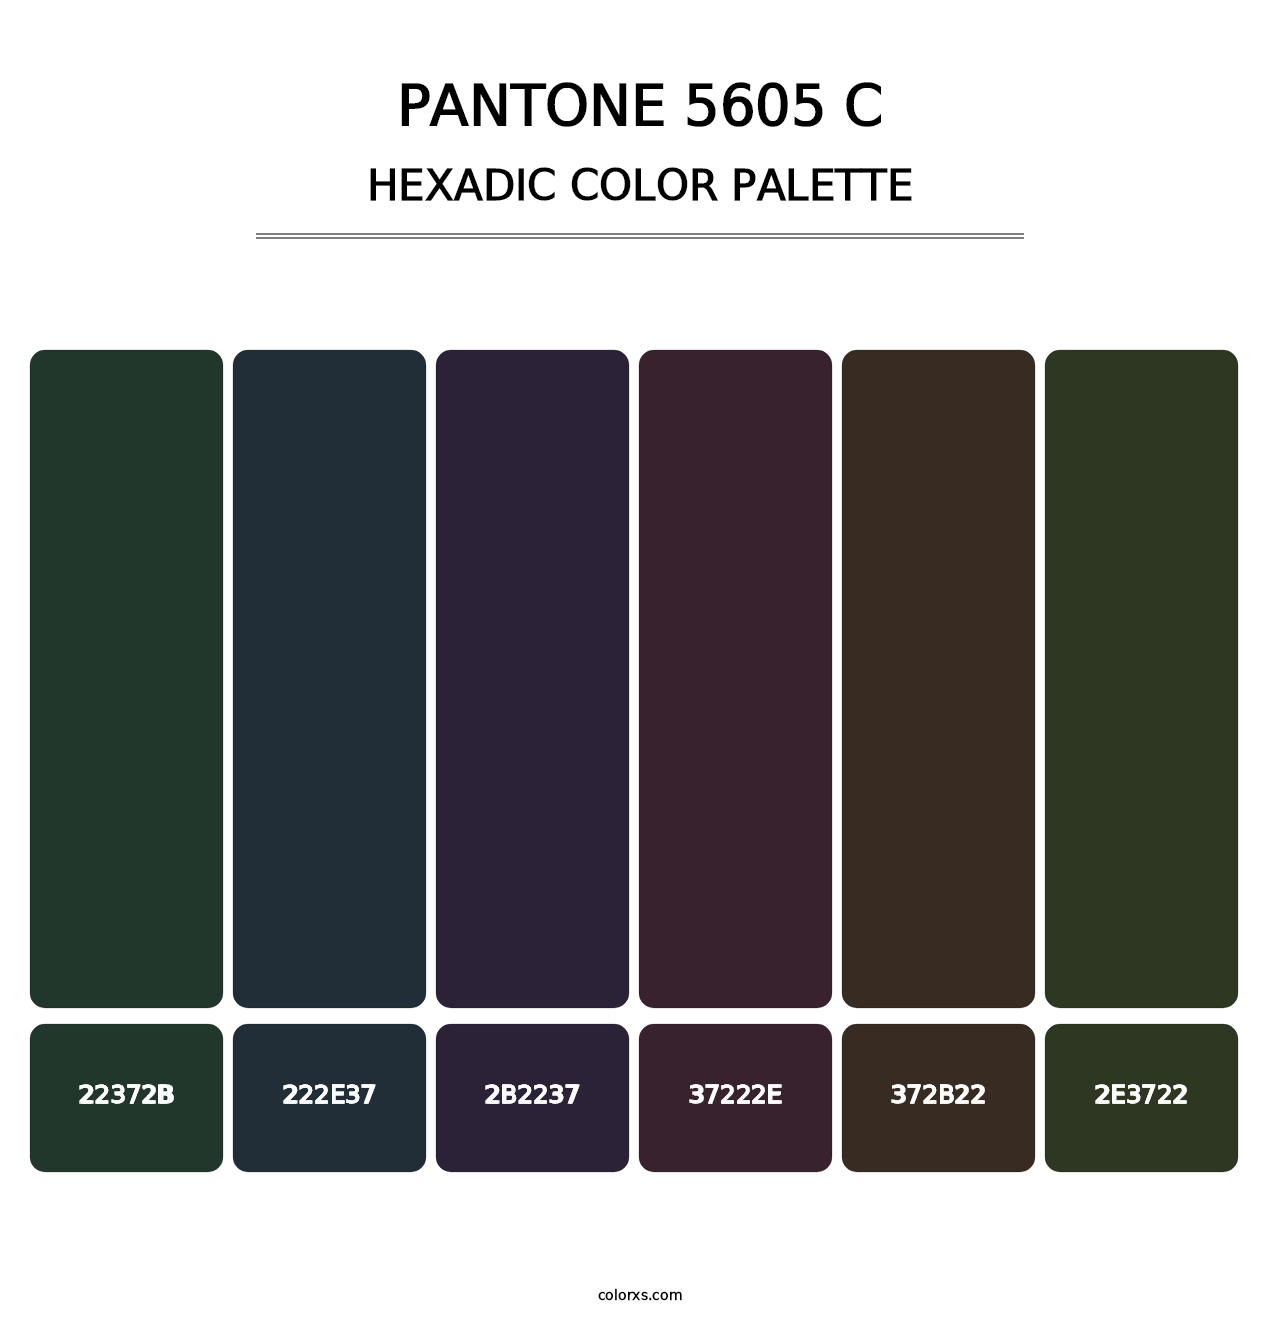 PANTONE 5605 C - Hexadic Color Palette